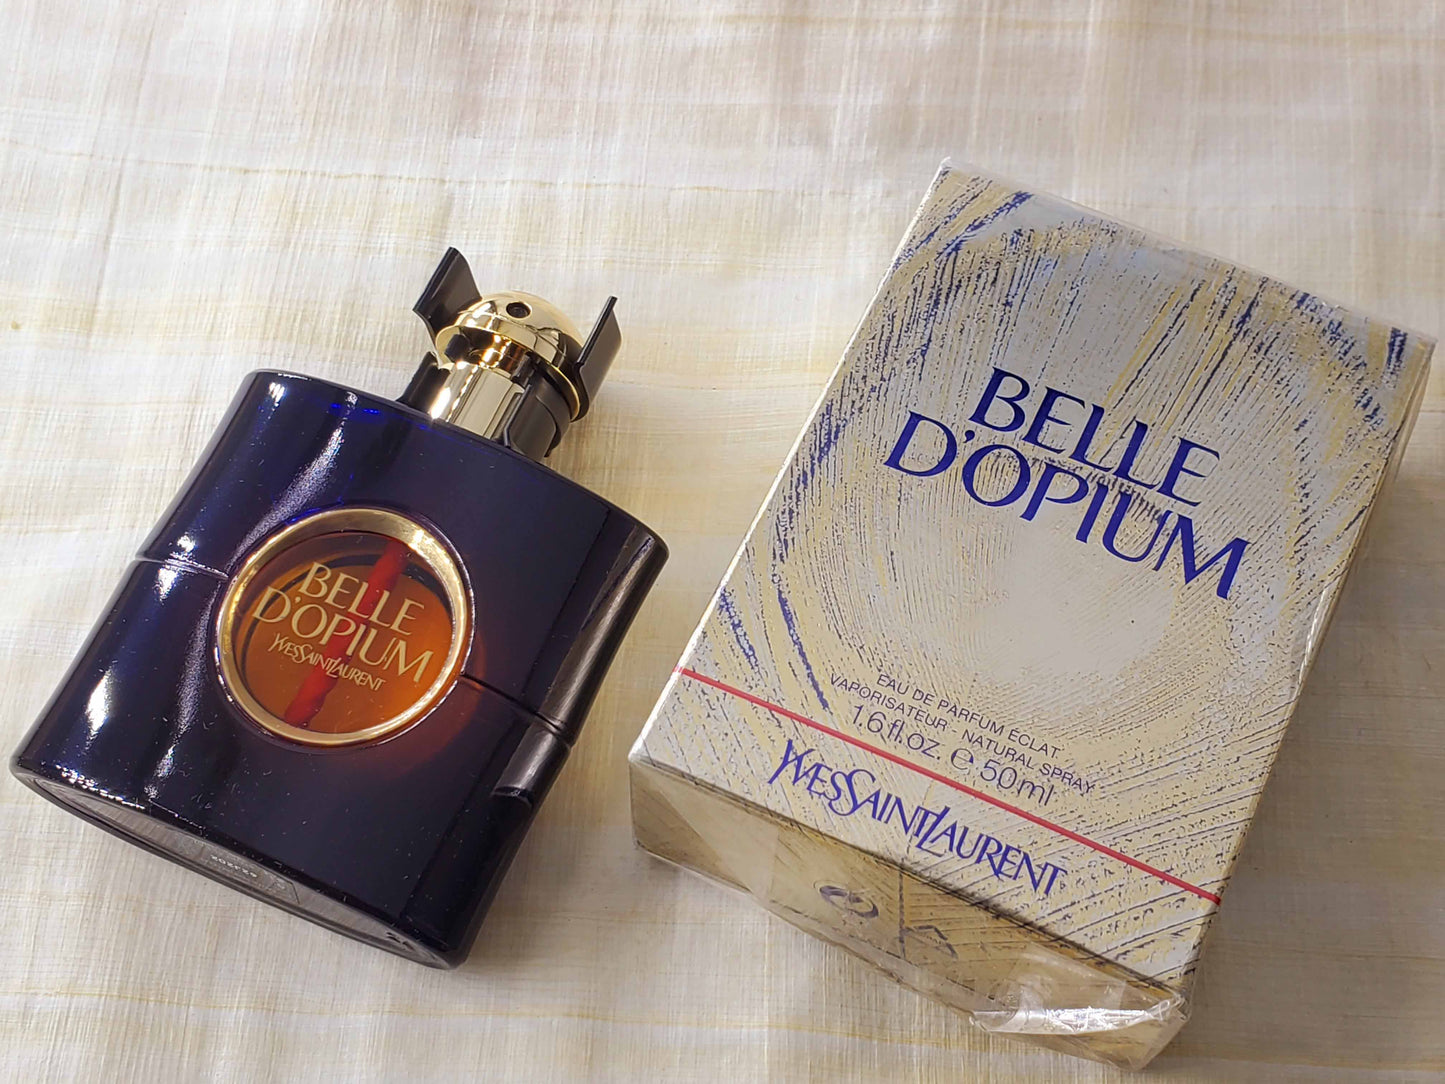 Belle D'opium Eclat by Yves Saint Laurent